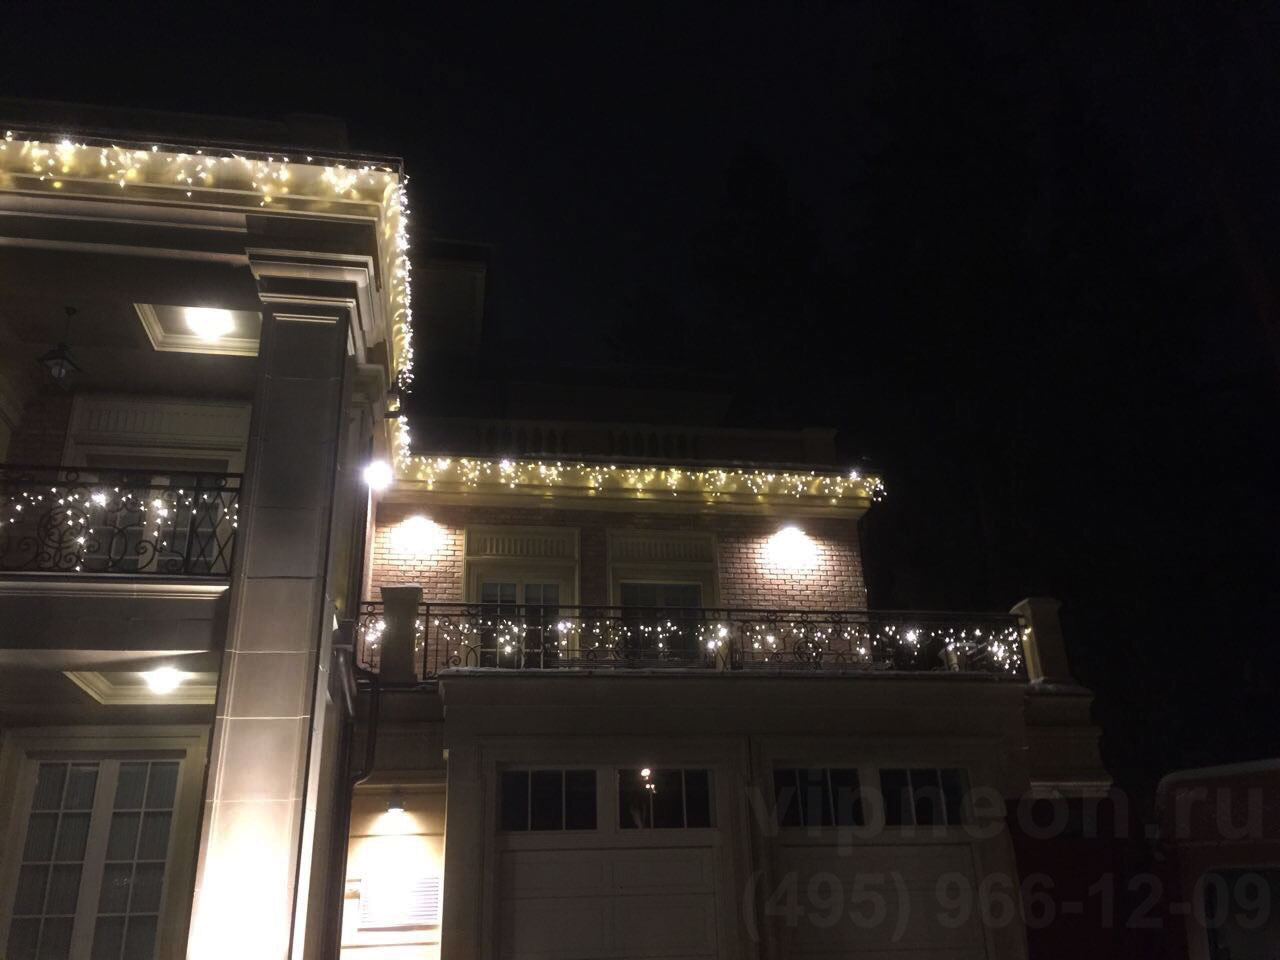 LED бахрома в световом украшении фасада